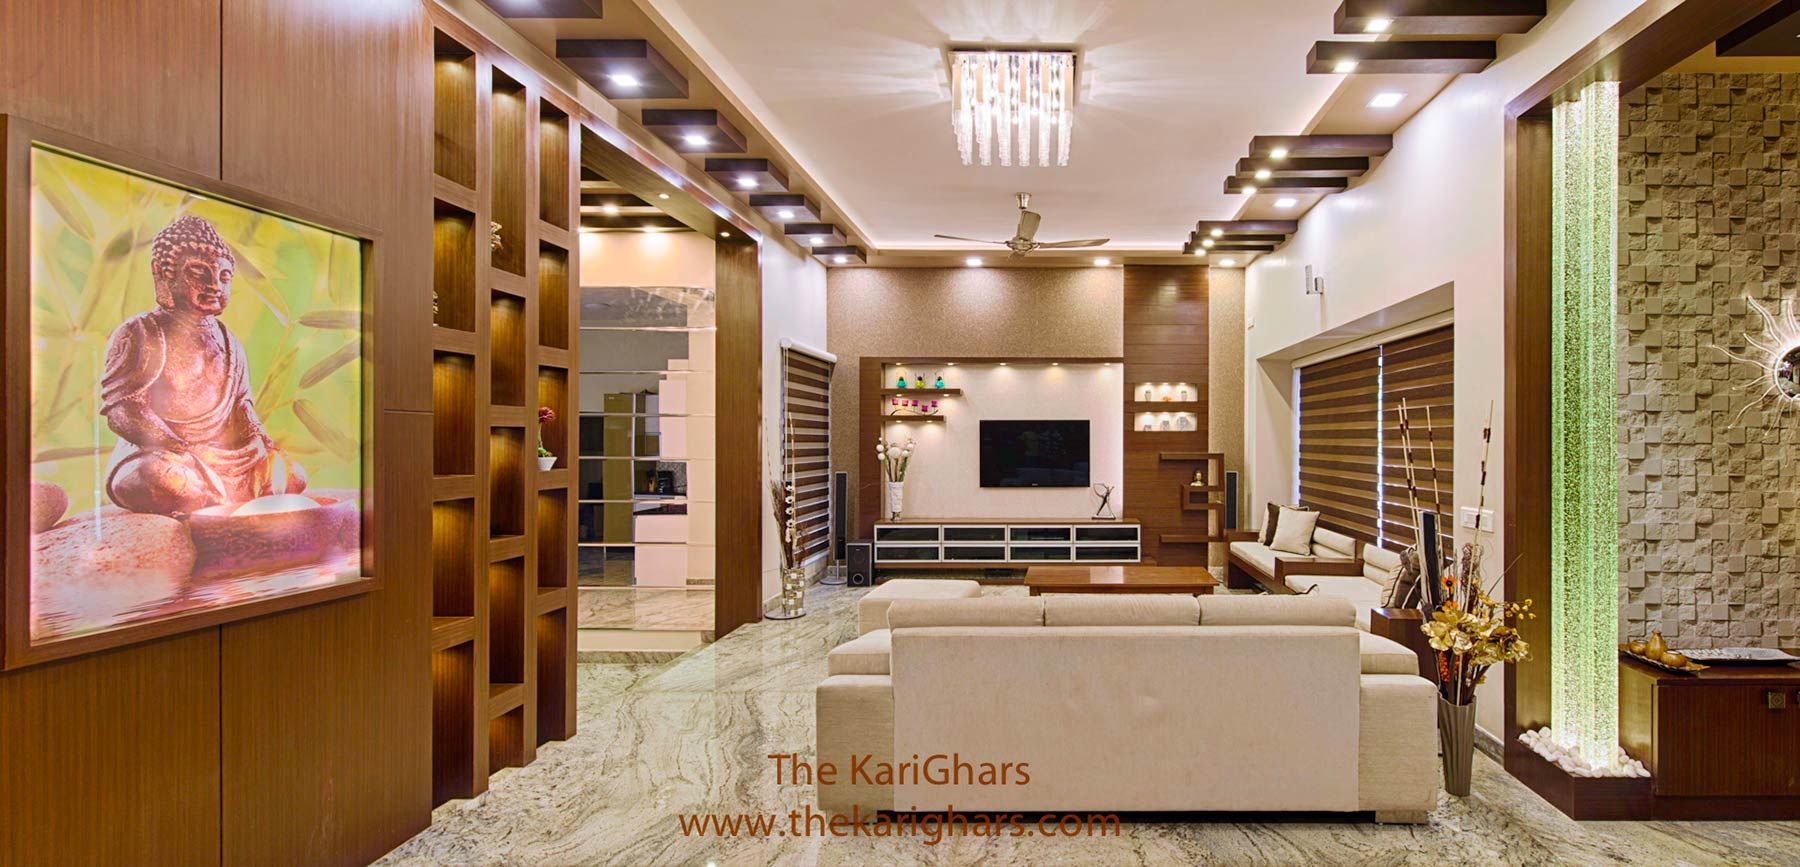 Living room designs, The KariGhars The KariGhars Salones de estilo moderno